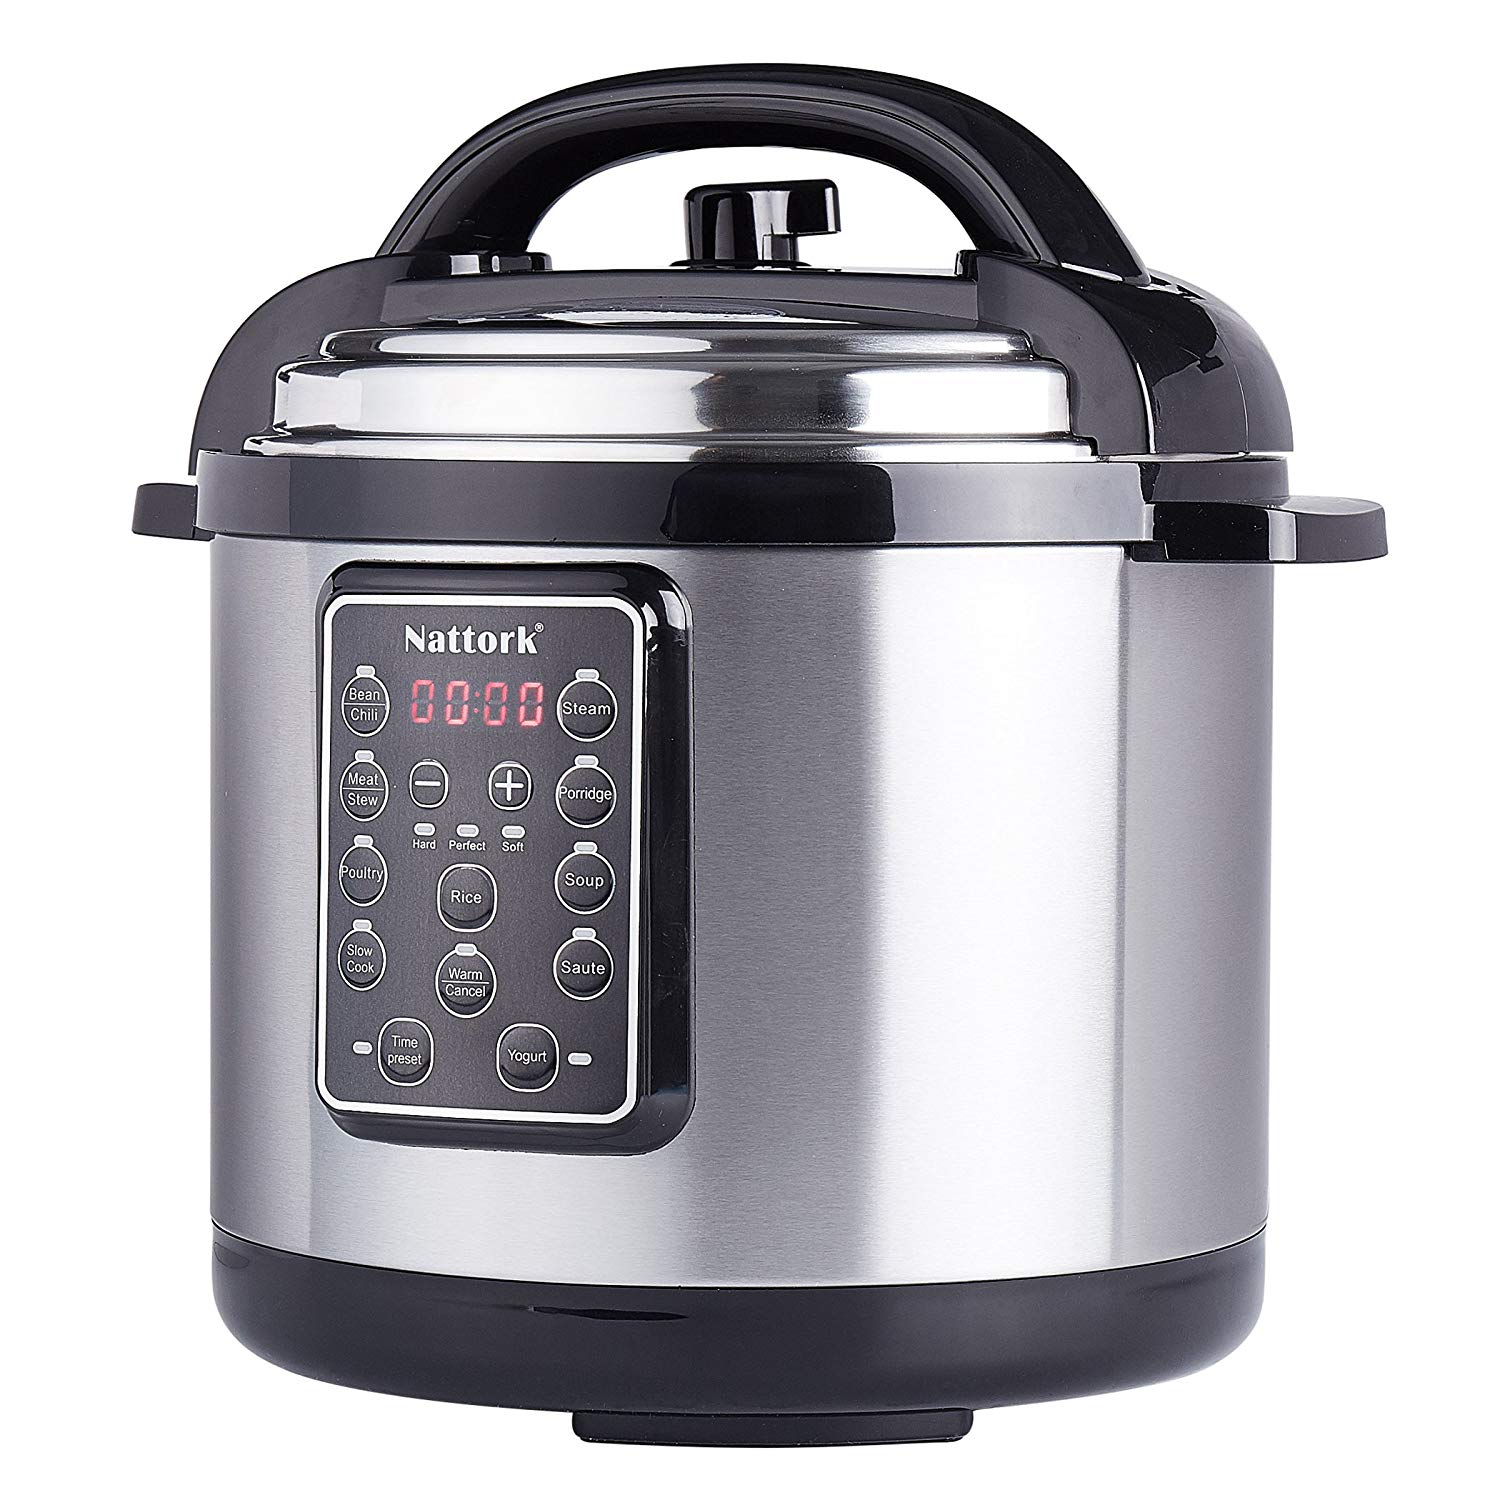 Rena ware Multi Cooker  Multicooker, Cooker, Kitchen appliances